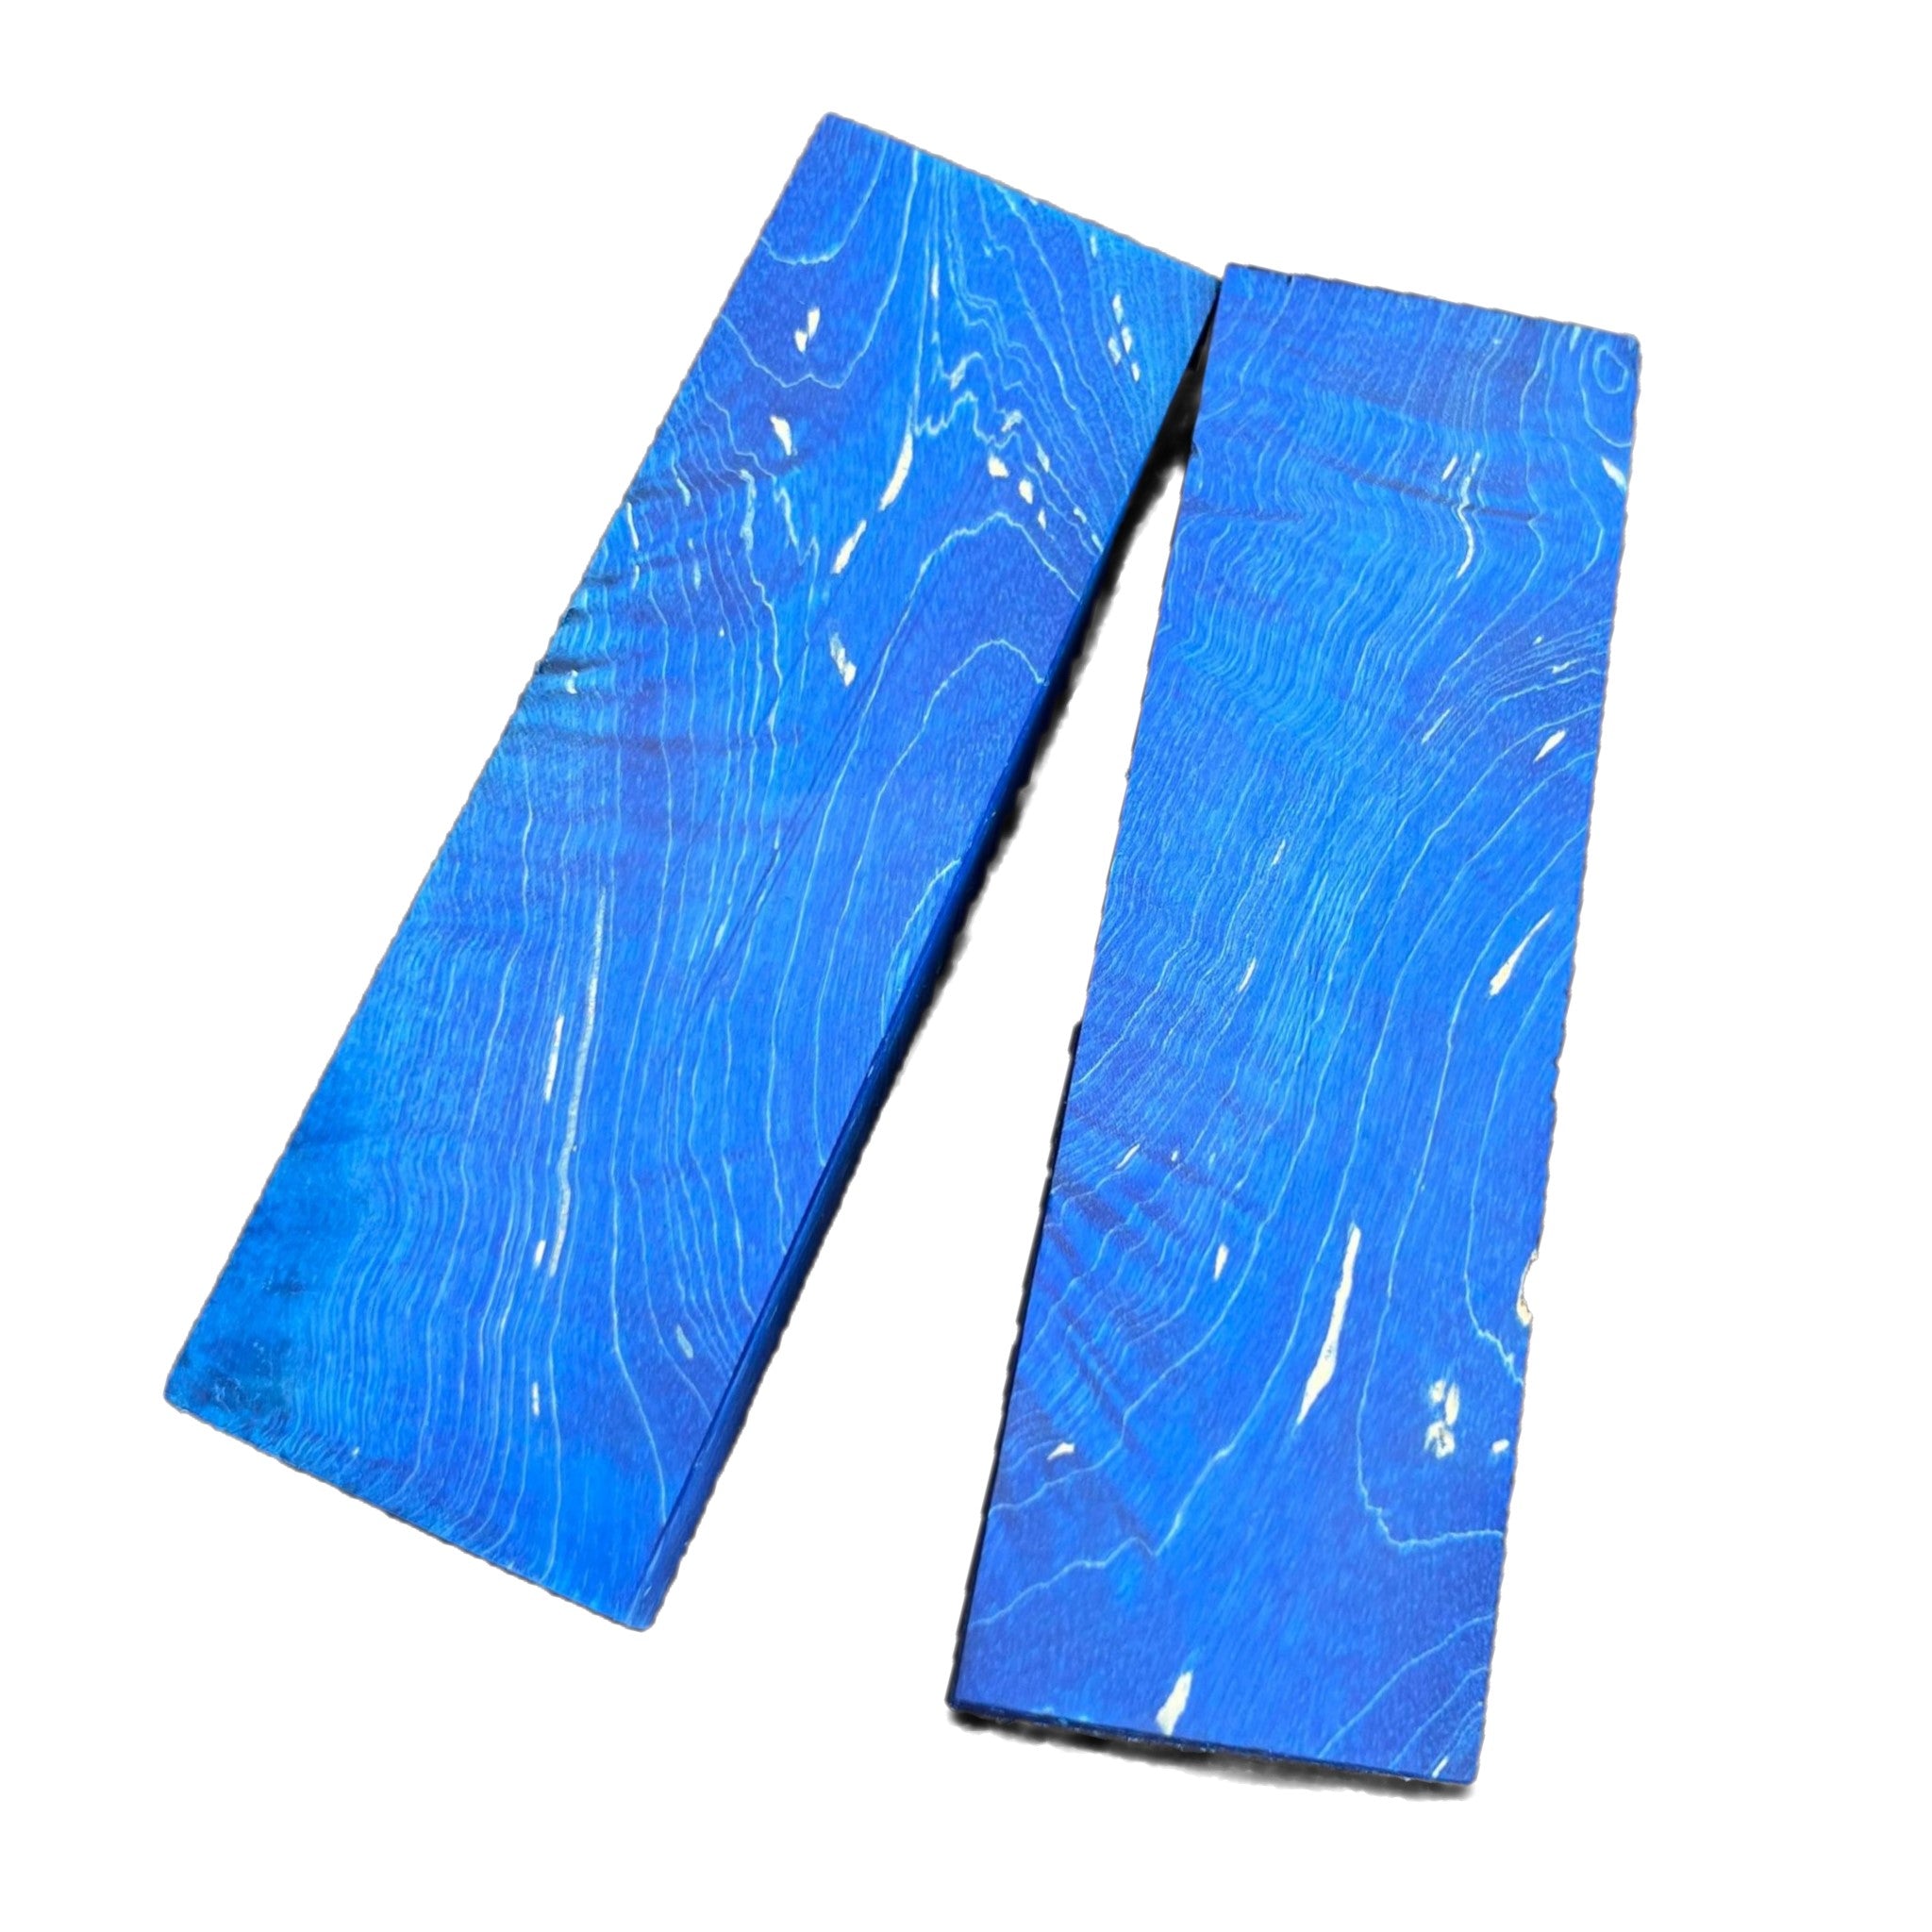 Blue Stabilised Maple Curly Grain (30x40x135mm)